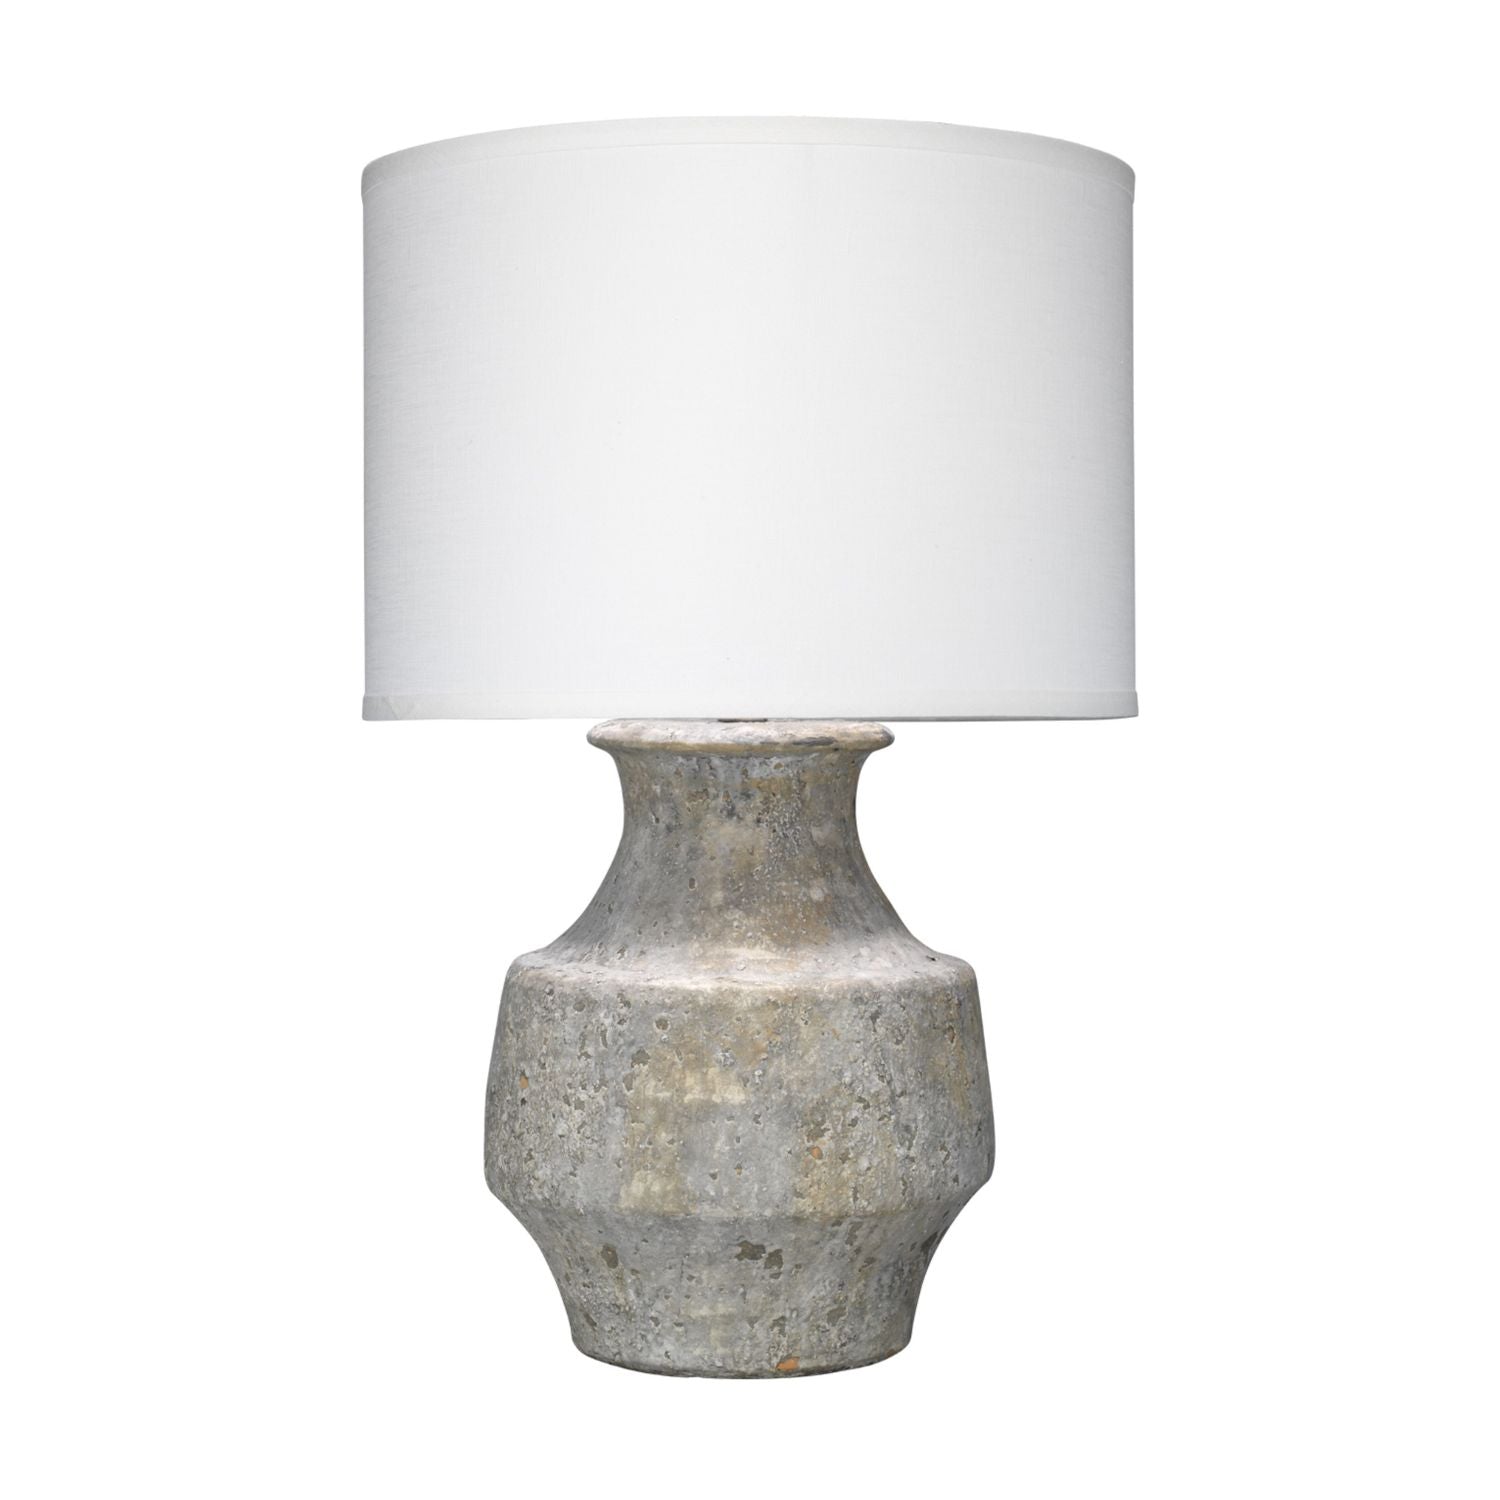 Masonry Ceramic Table Lamp, Grey